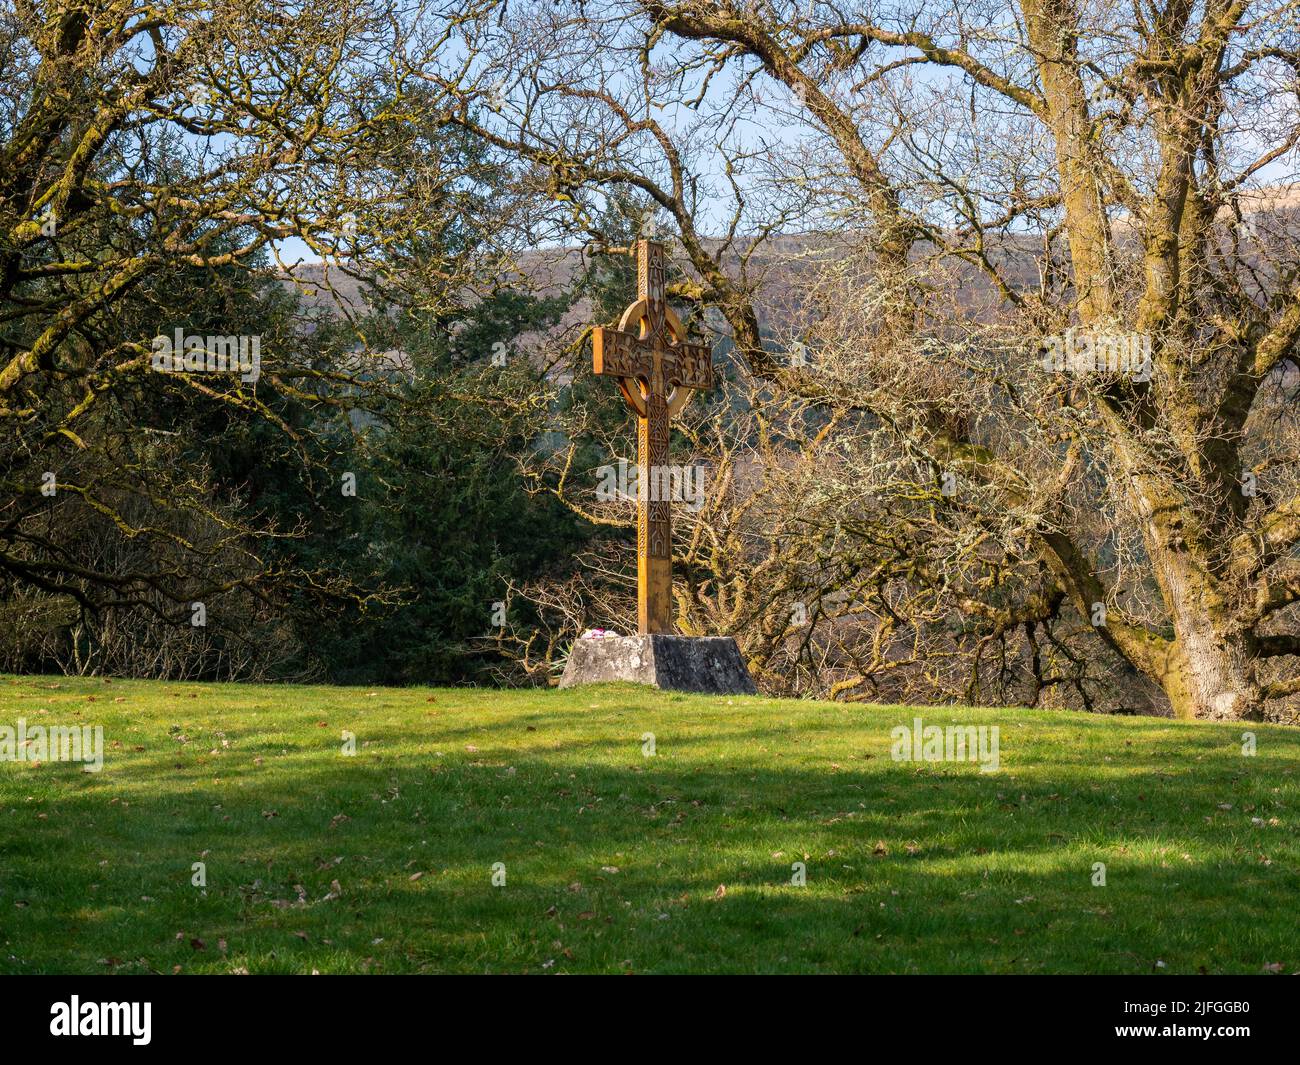 A cross in the grounds of Schoenstatt Shrine in Campsie Glen, Scotland which is modelled on the original shrine at Schoenstatt in Germany. Stock Photo